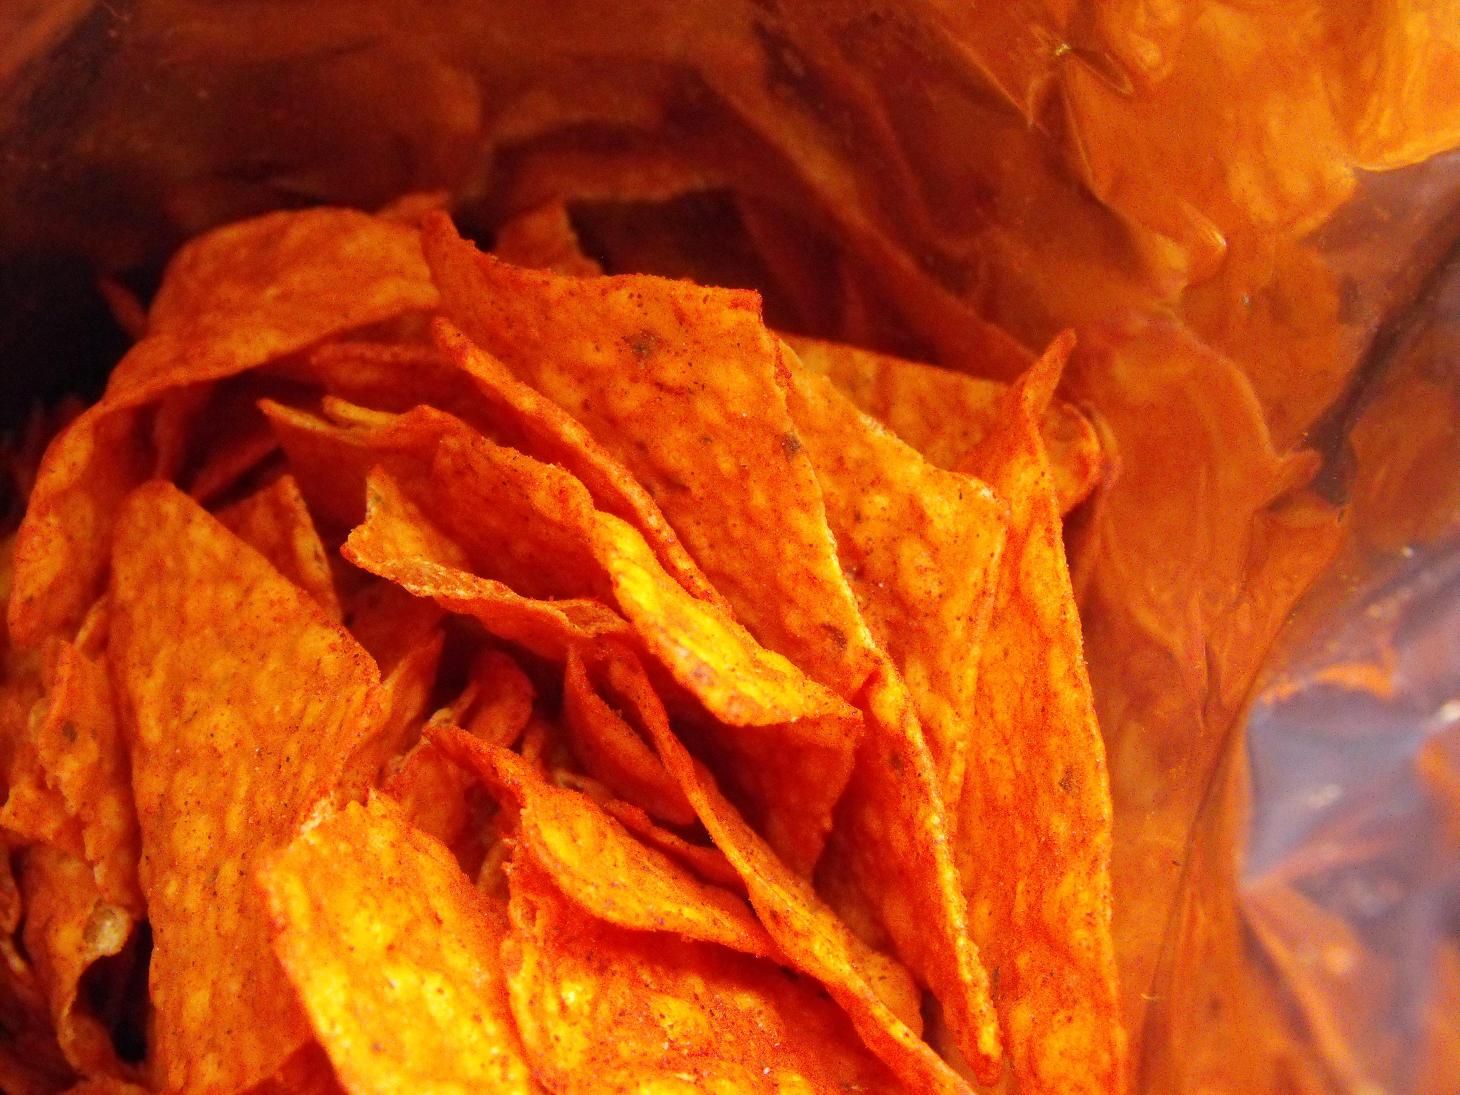 A bag of red tortilla chips - Doritos